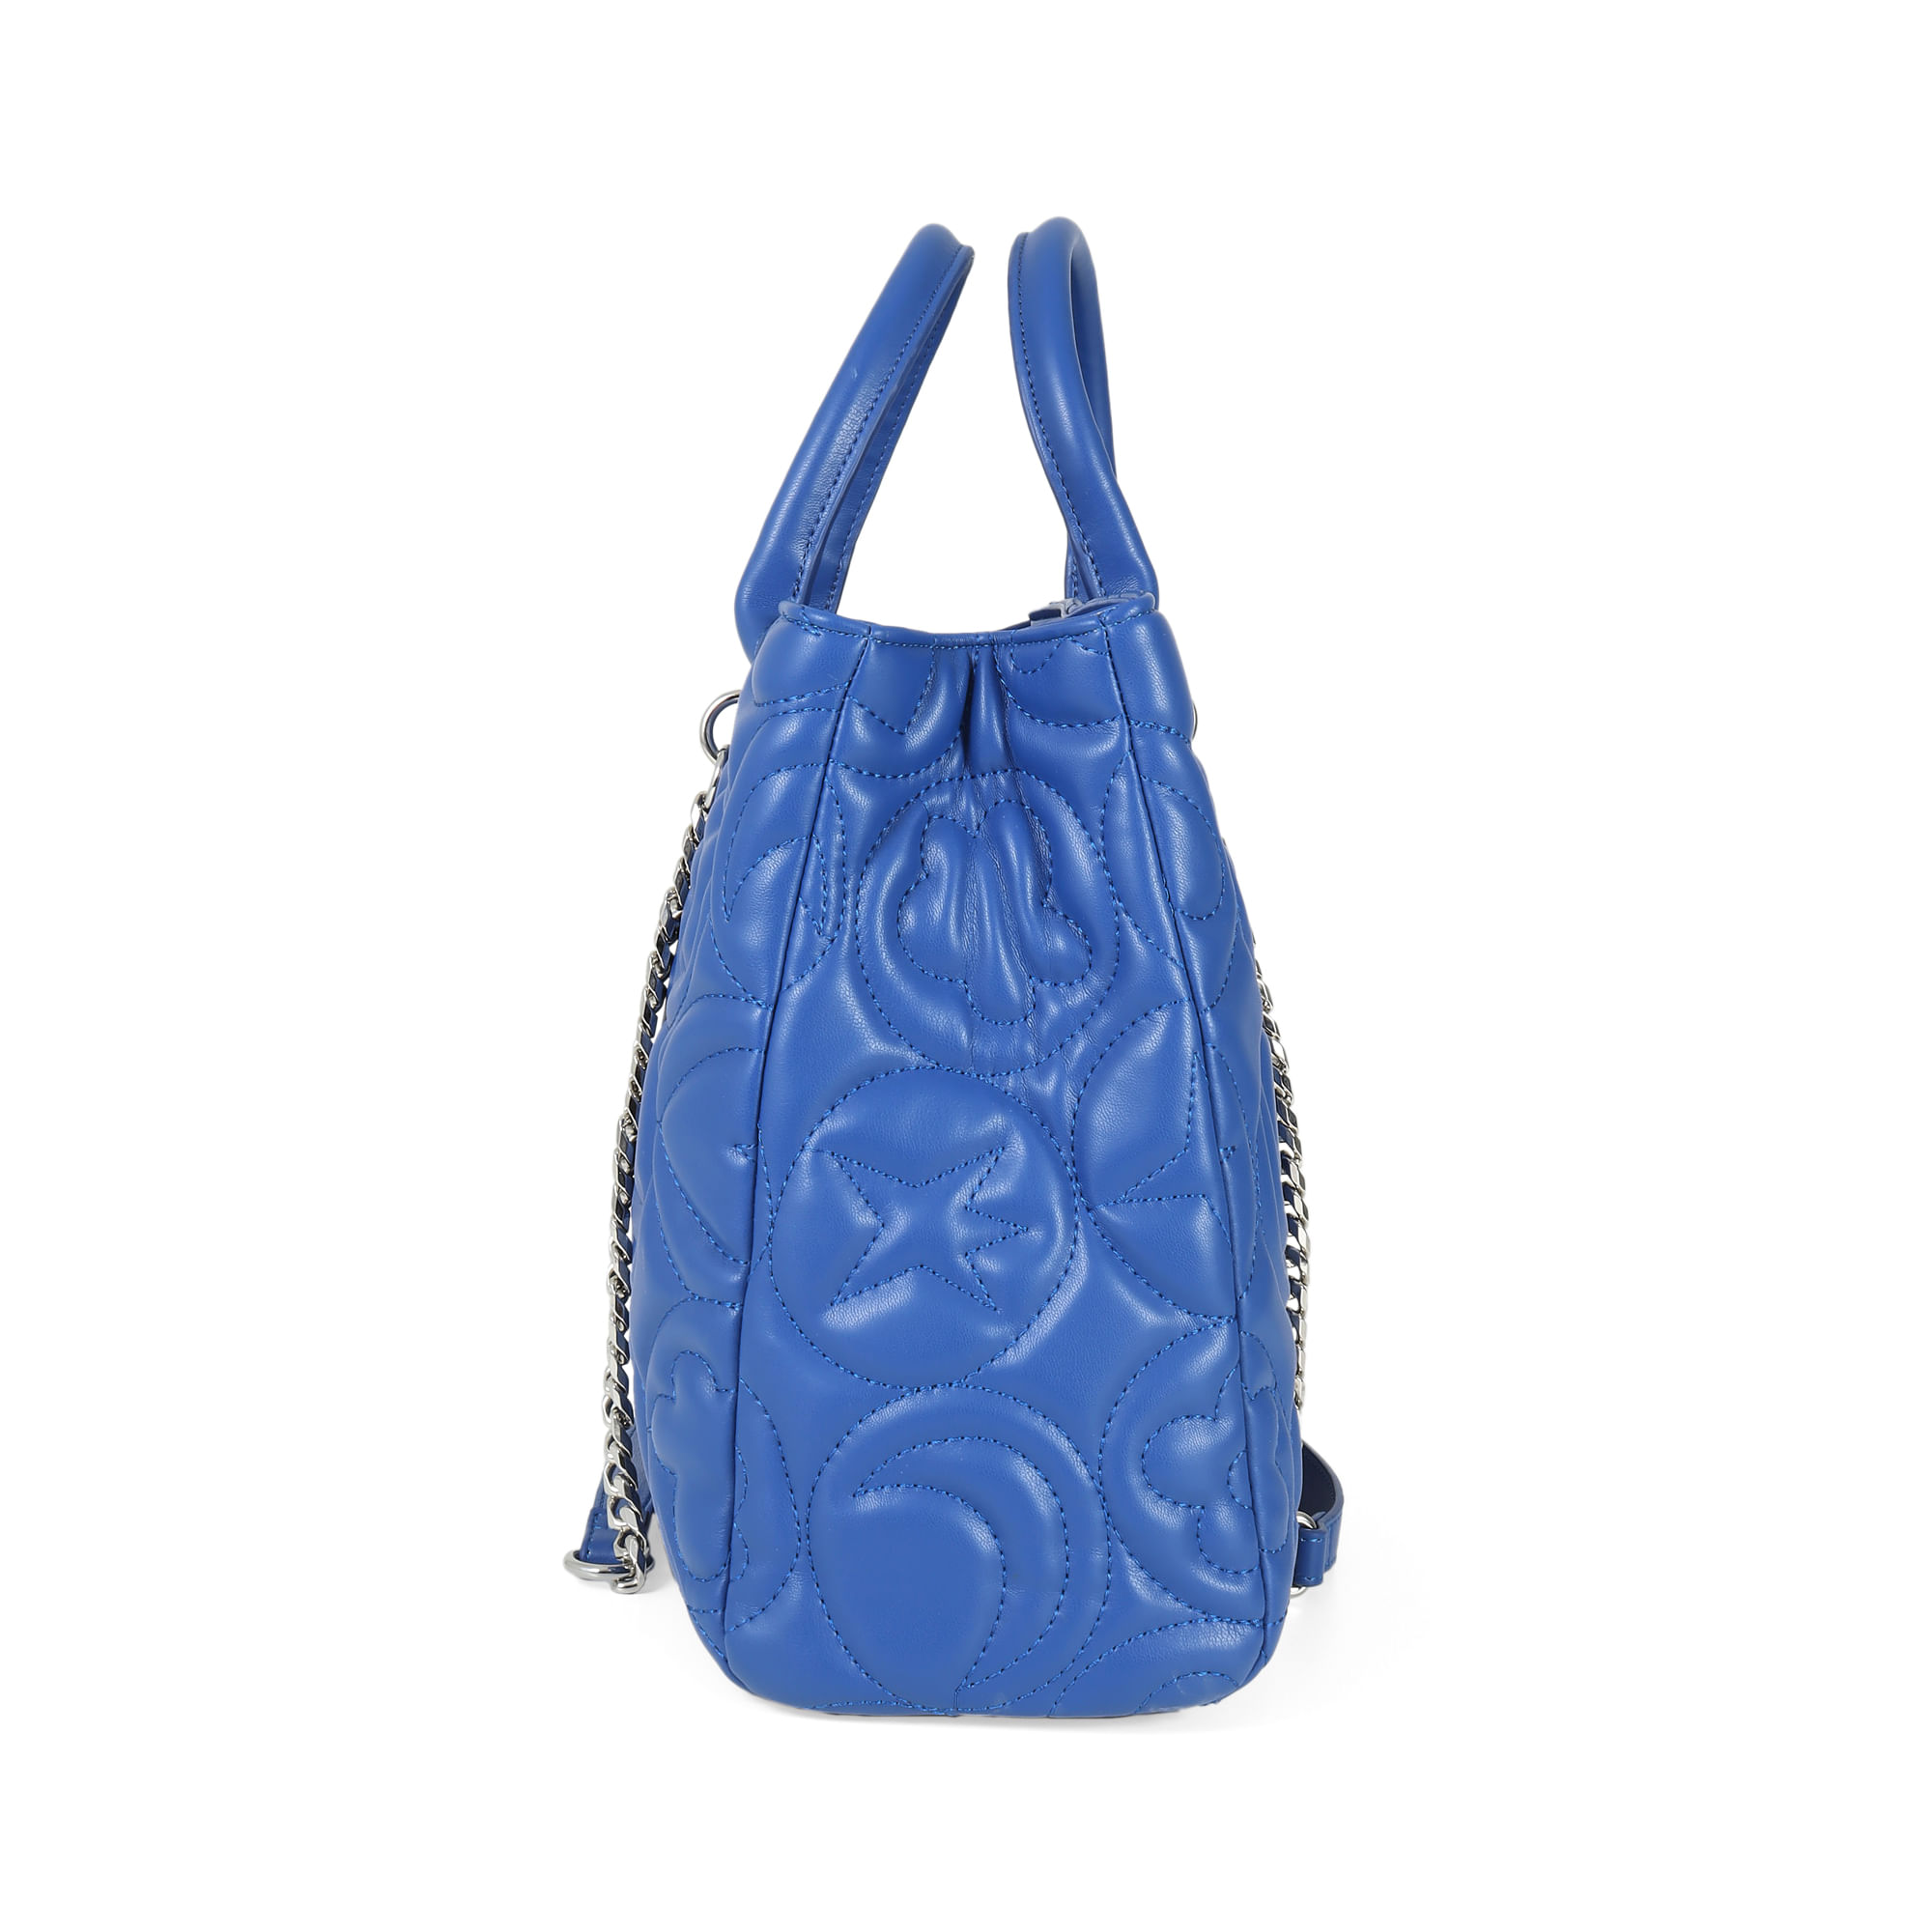 Bolsa Satchel Acolchada Cloe Agatha Ruiz de la Prada color Azul en color | Satchels | Cloe CLOE MX